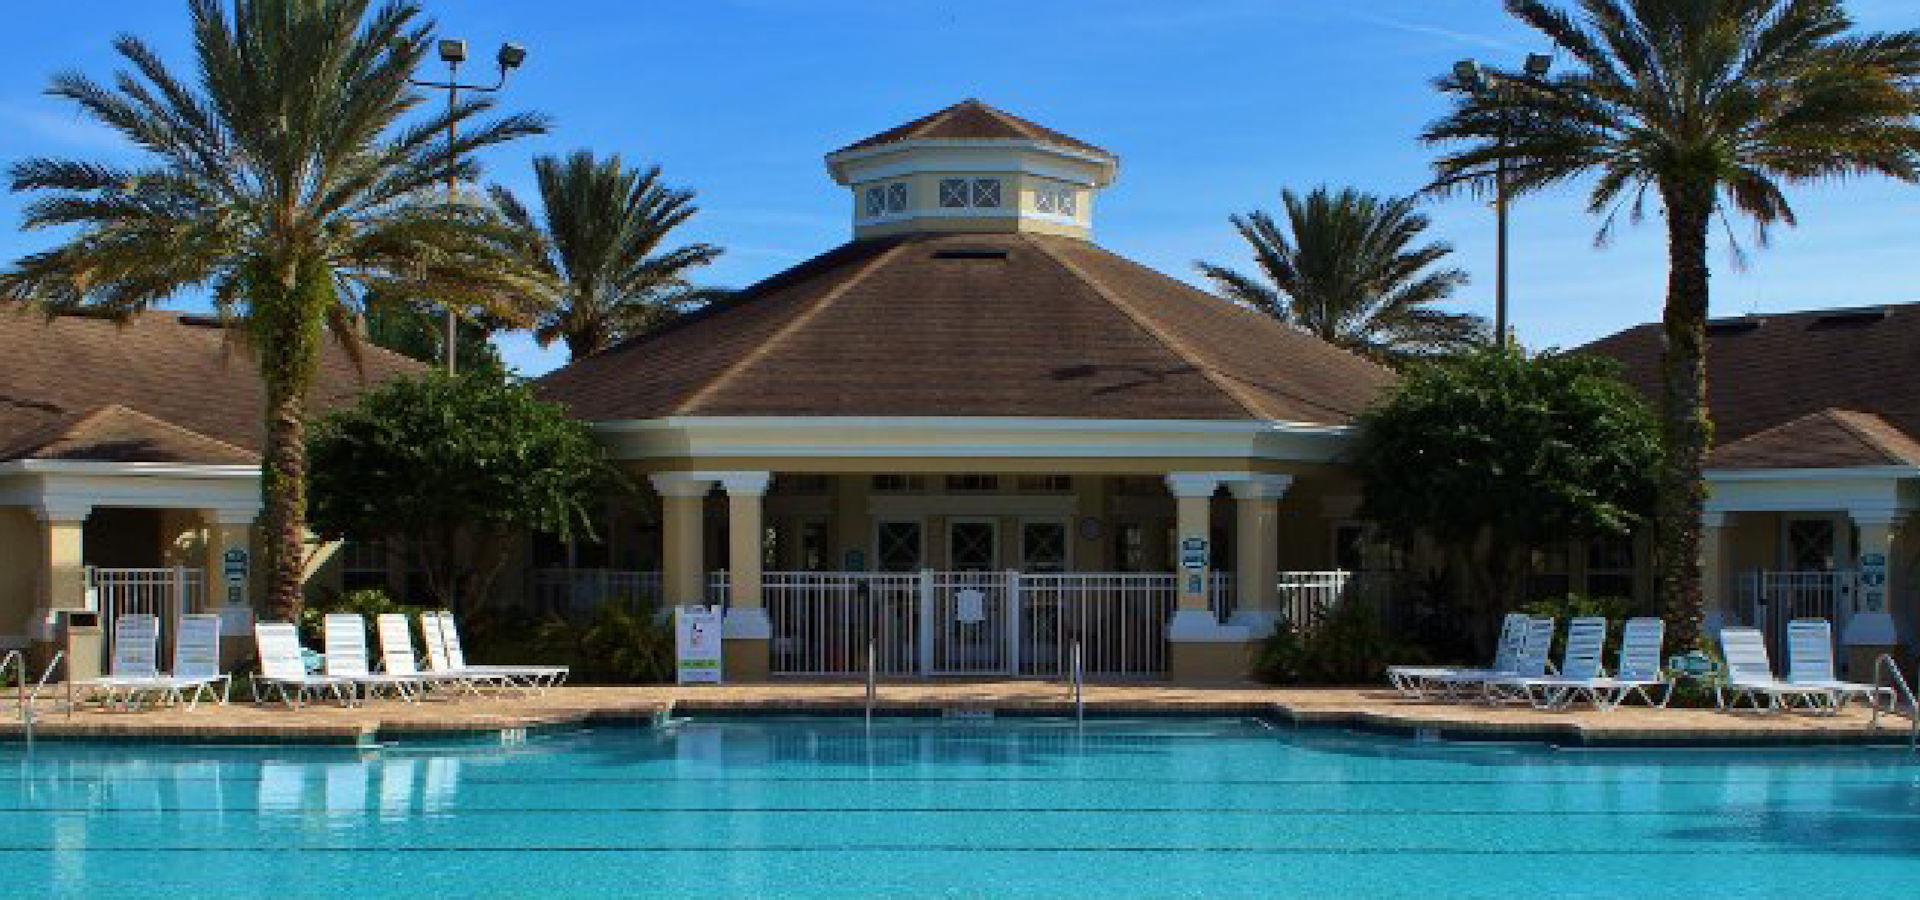 Windsor Palms Resort-style community of florida villas